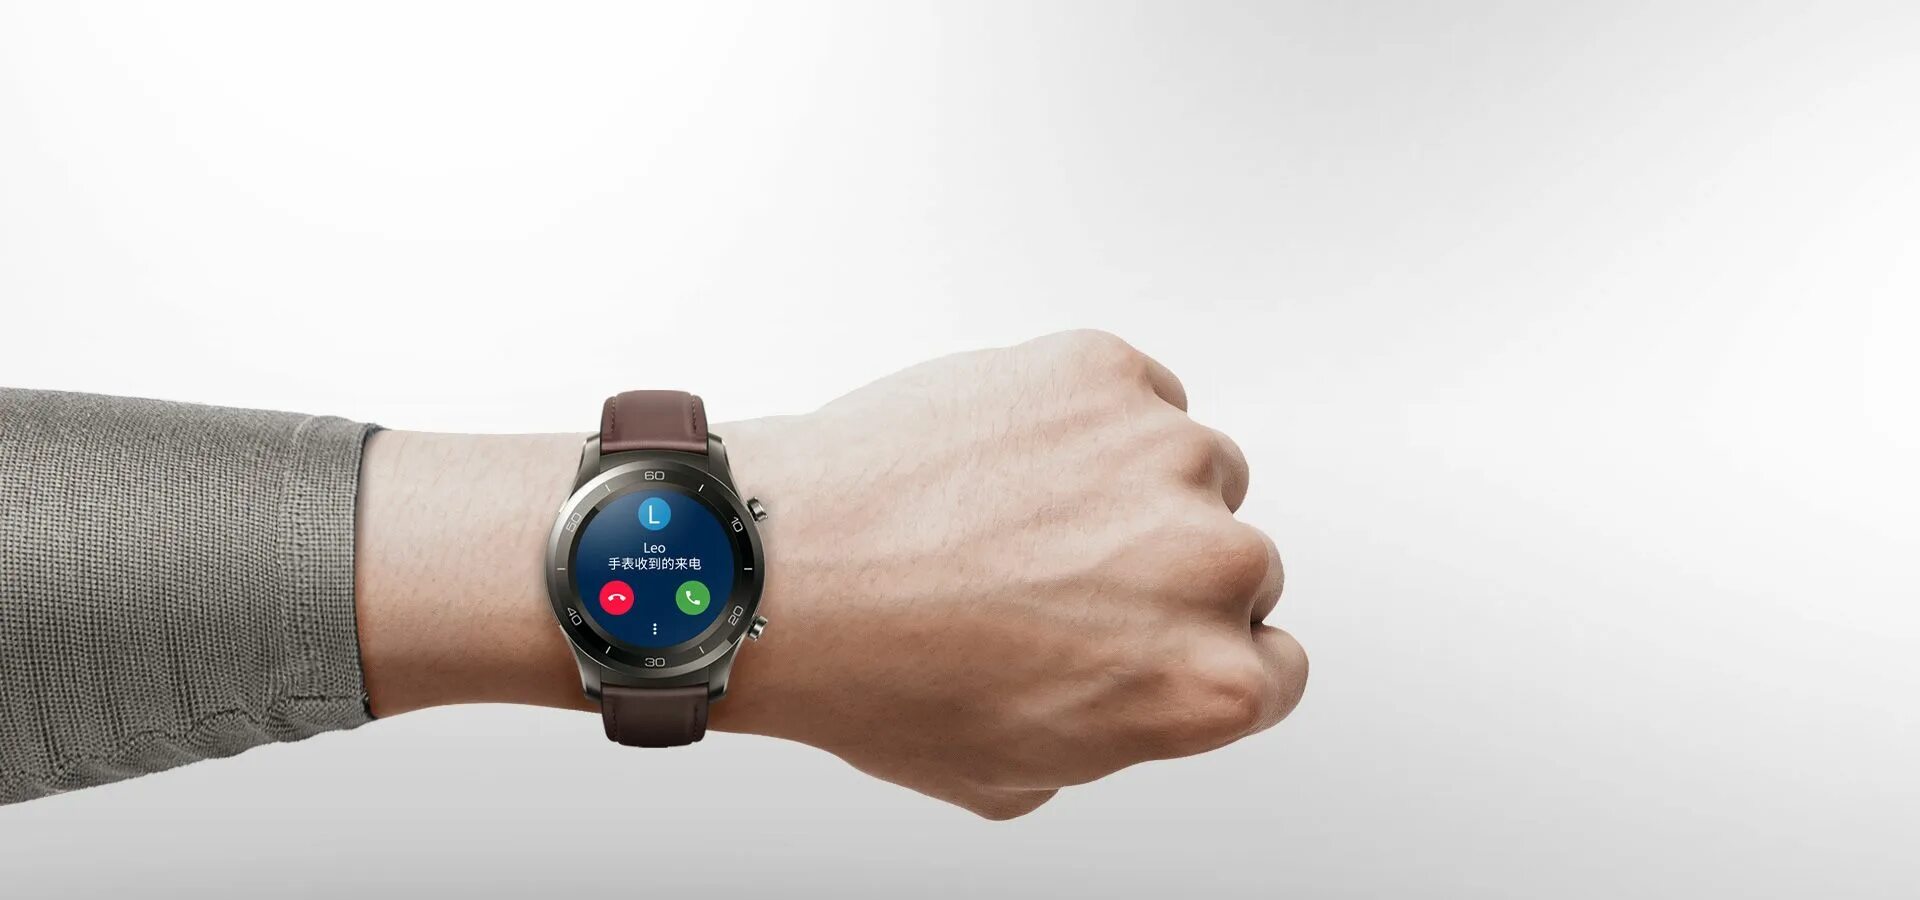 Часы x3 Pro Max NFC. Huawei pay часы. Смарт часы Huawei PNG. Huawei Technologies смарт часы. Хуавей вотч давление